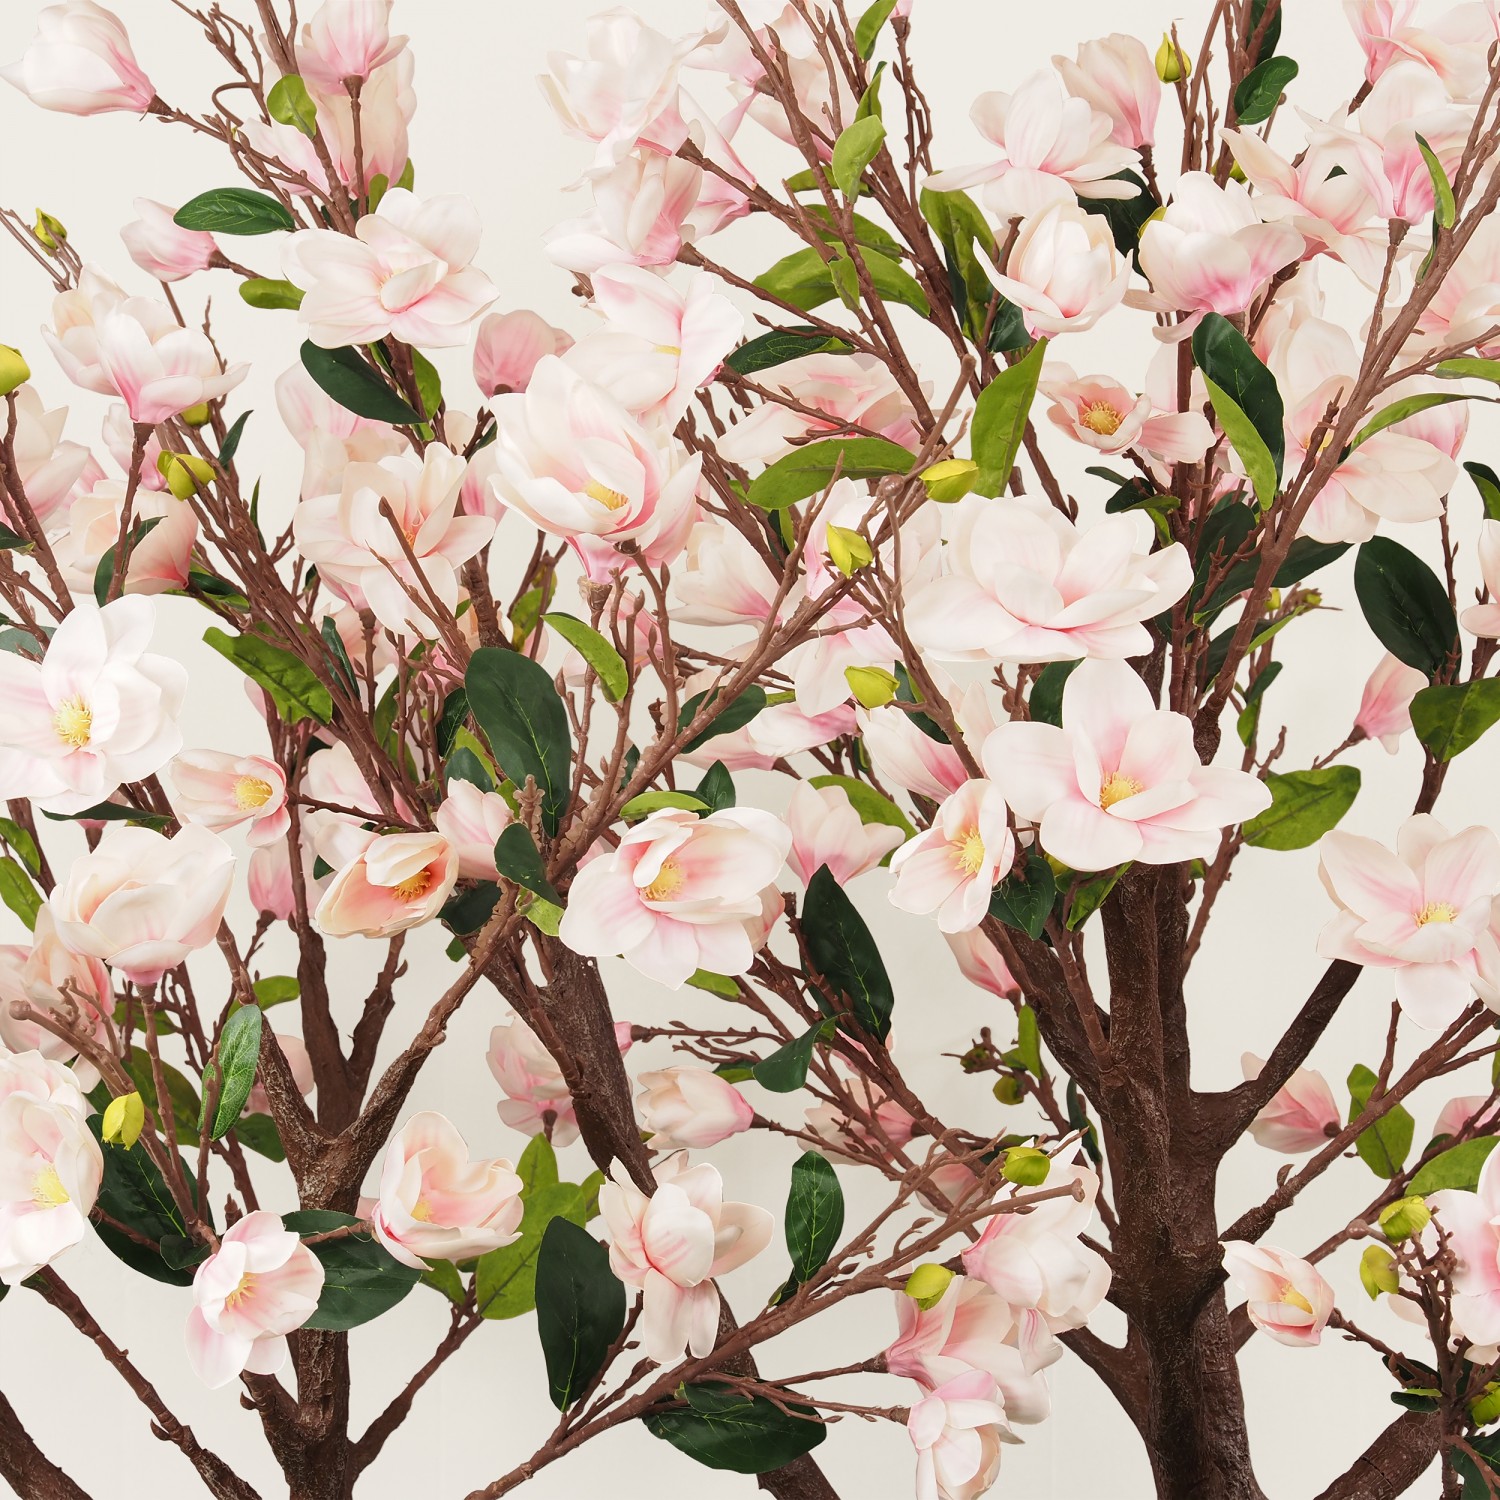 Arbre artificiel magnolia 260cm focus zoom produit